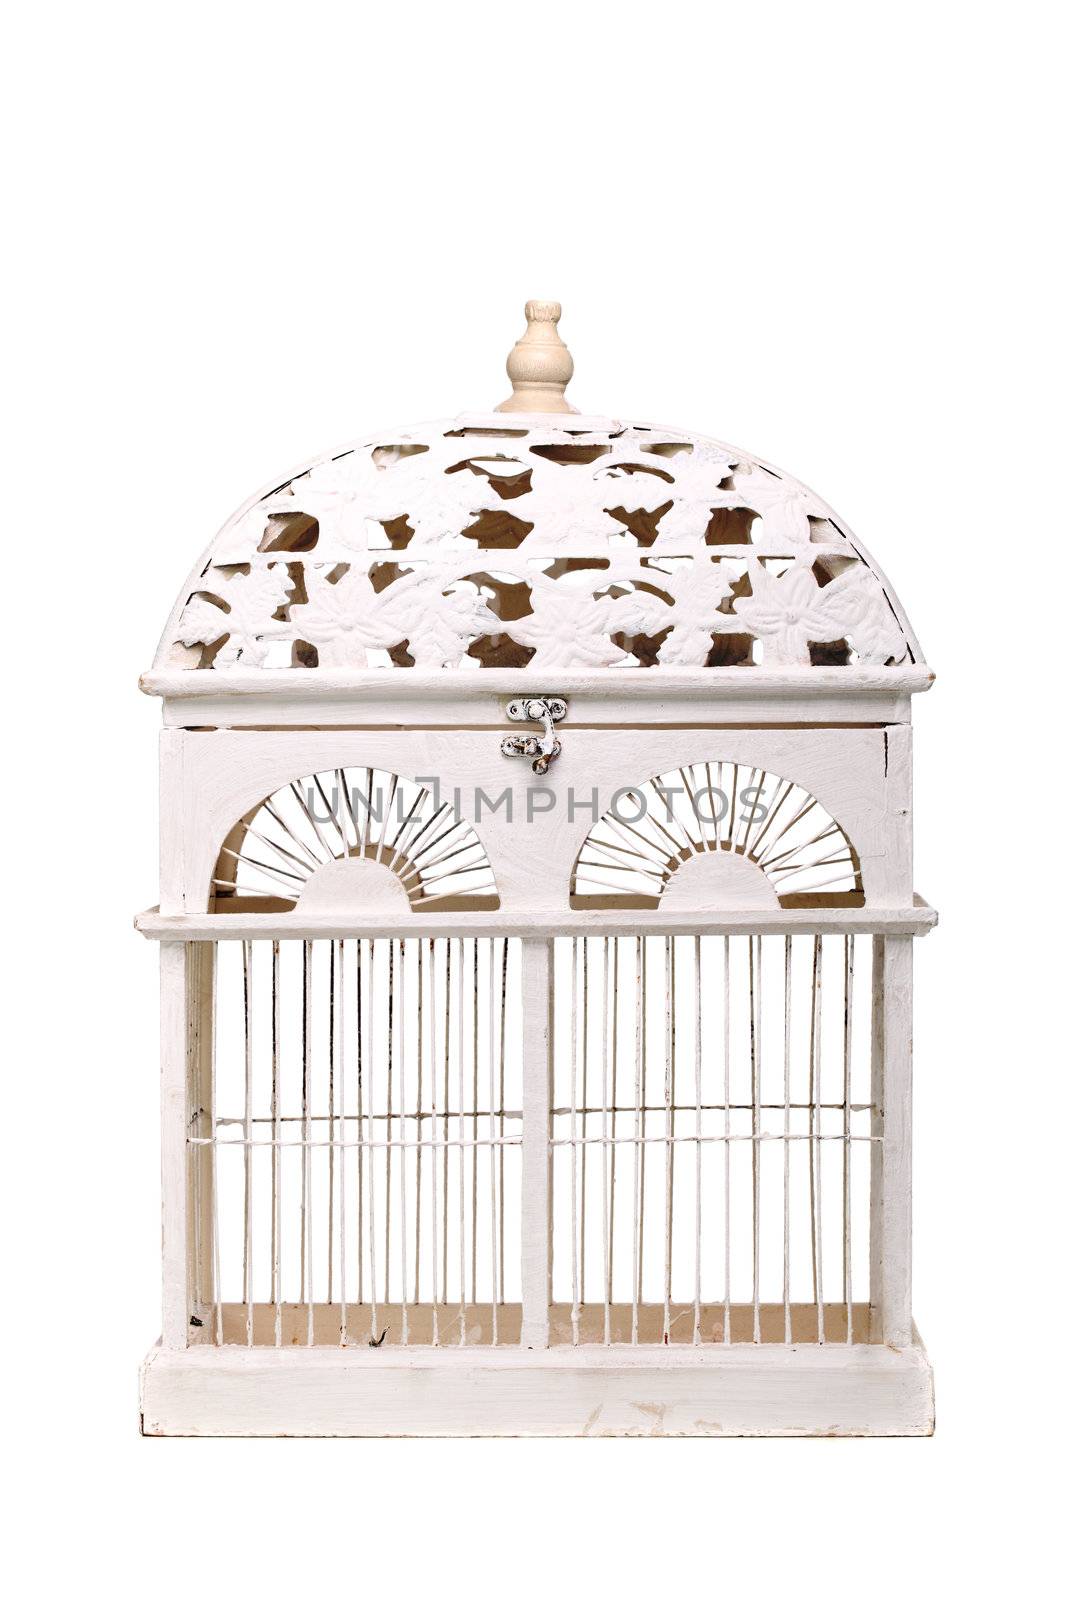 vintage bird cage isolated on white background